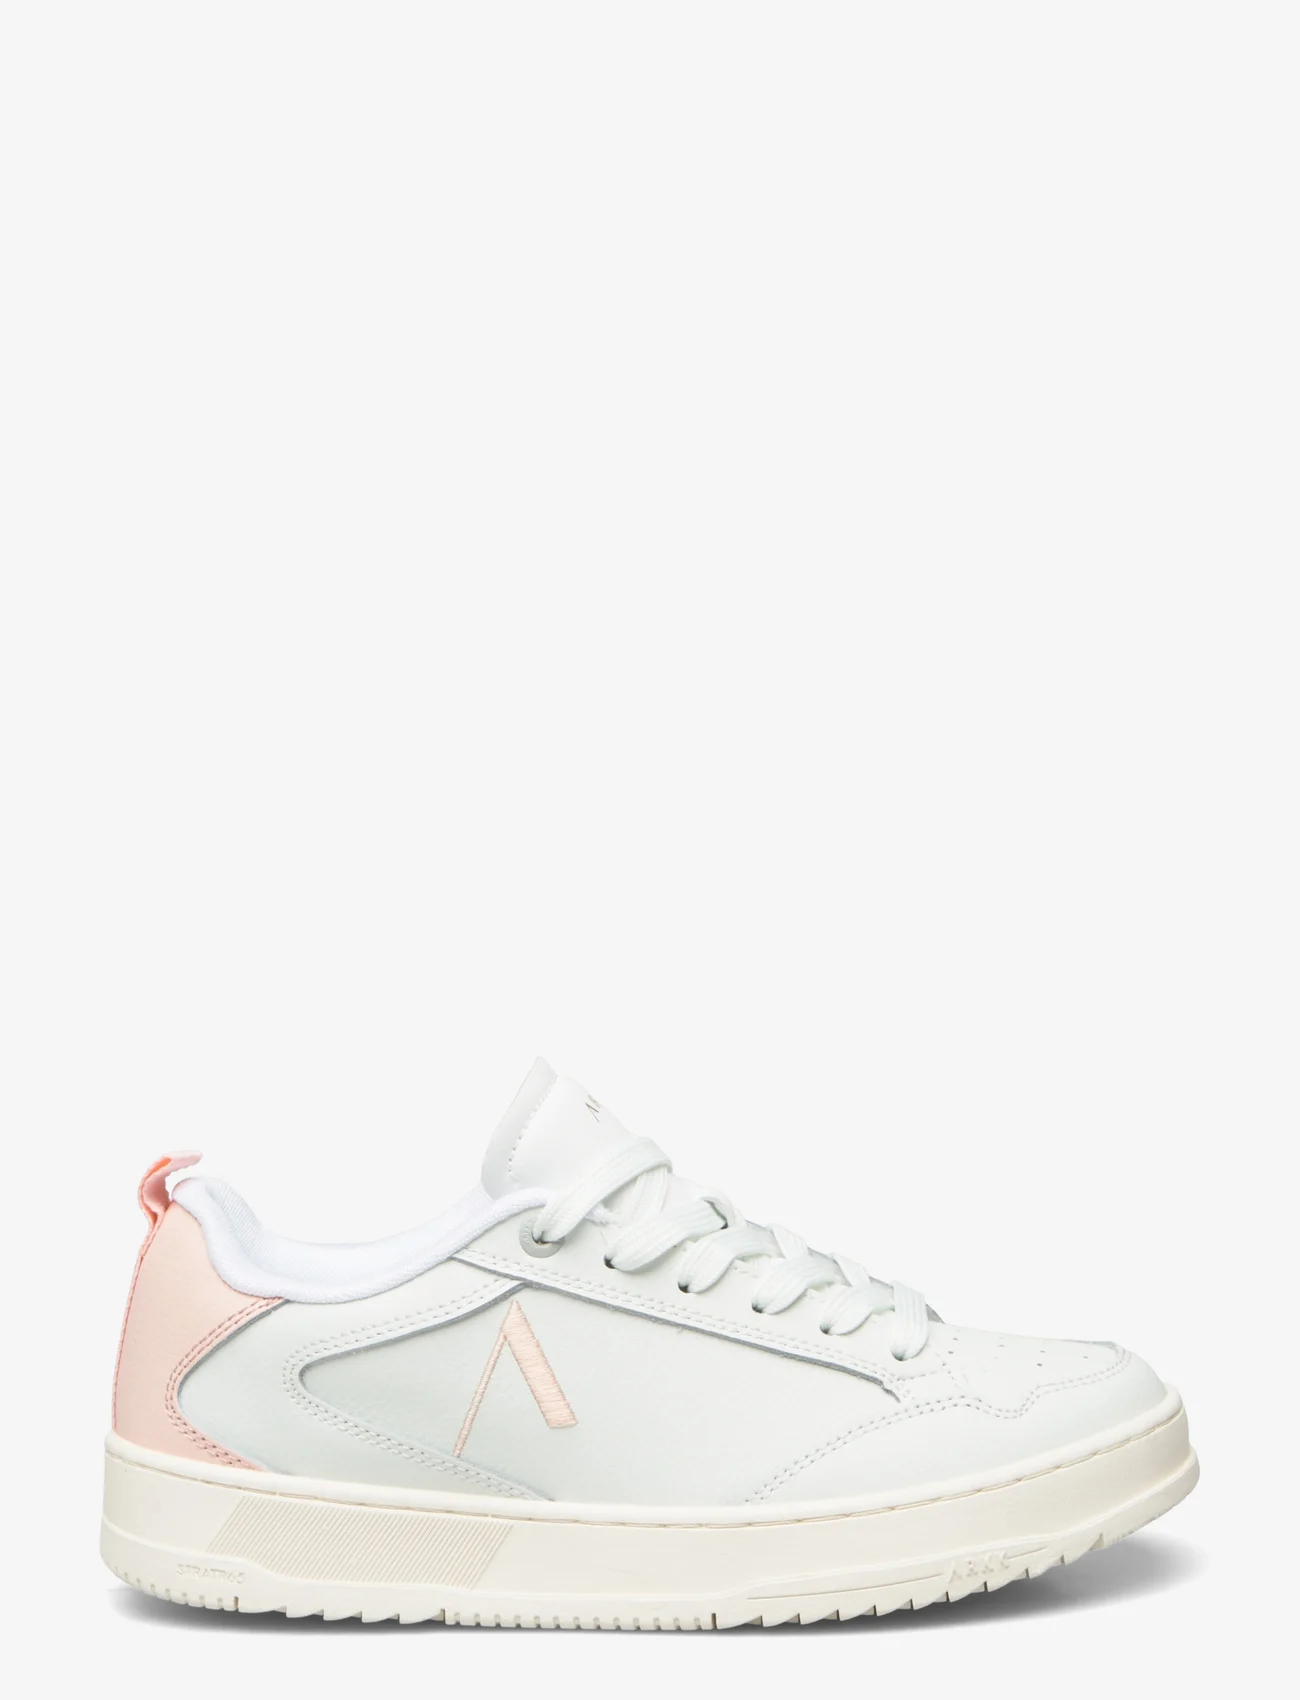 ARKK Copenhagen - Visuklass Leather Stratr65 White Soft Pink - Women - low top sneakers - white soft pink - 1